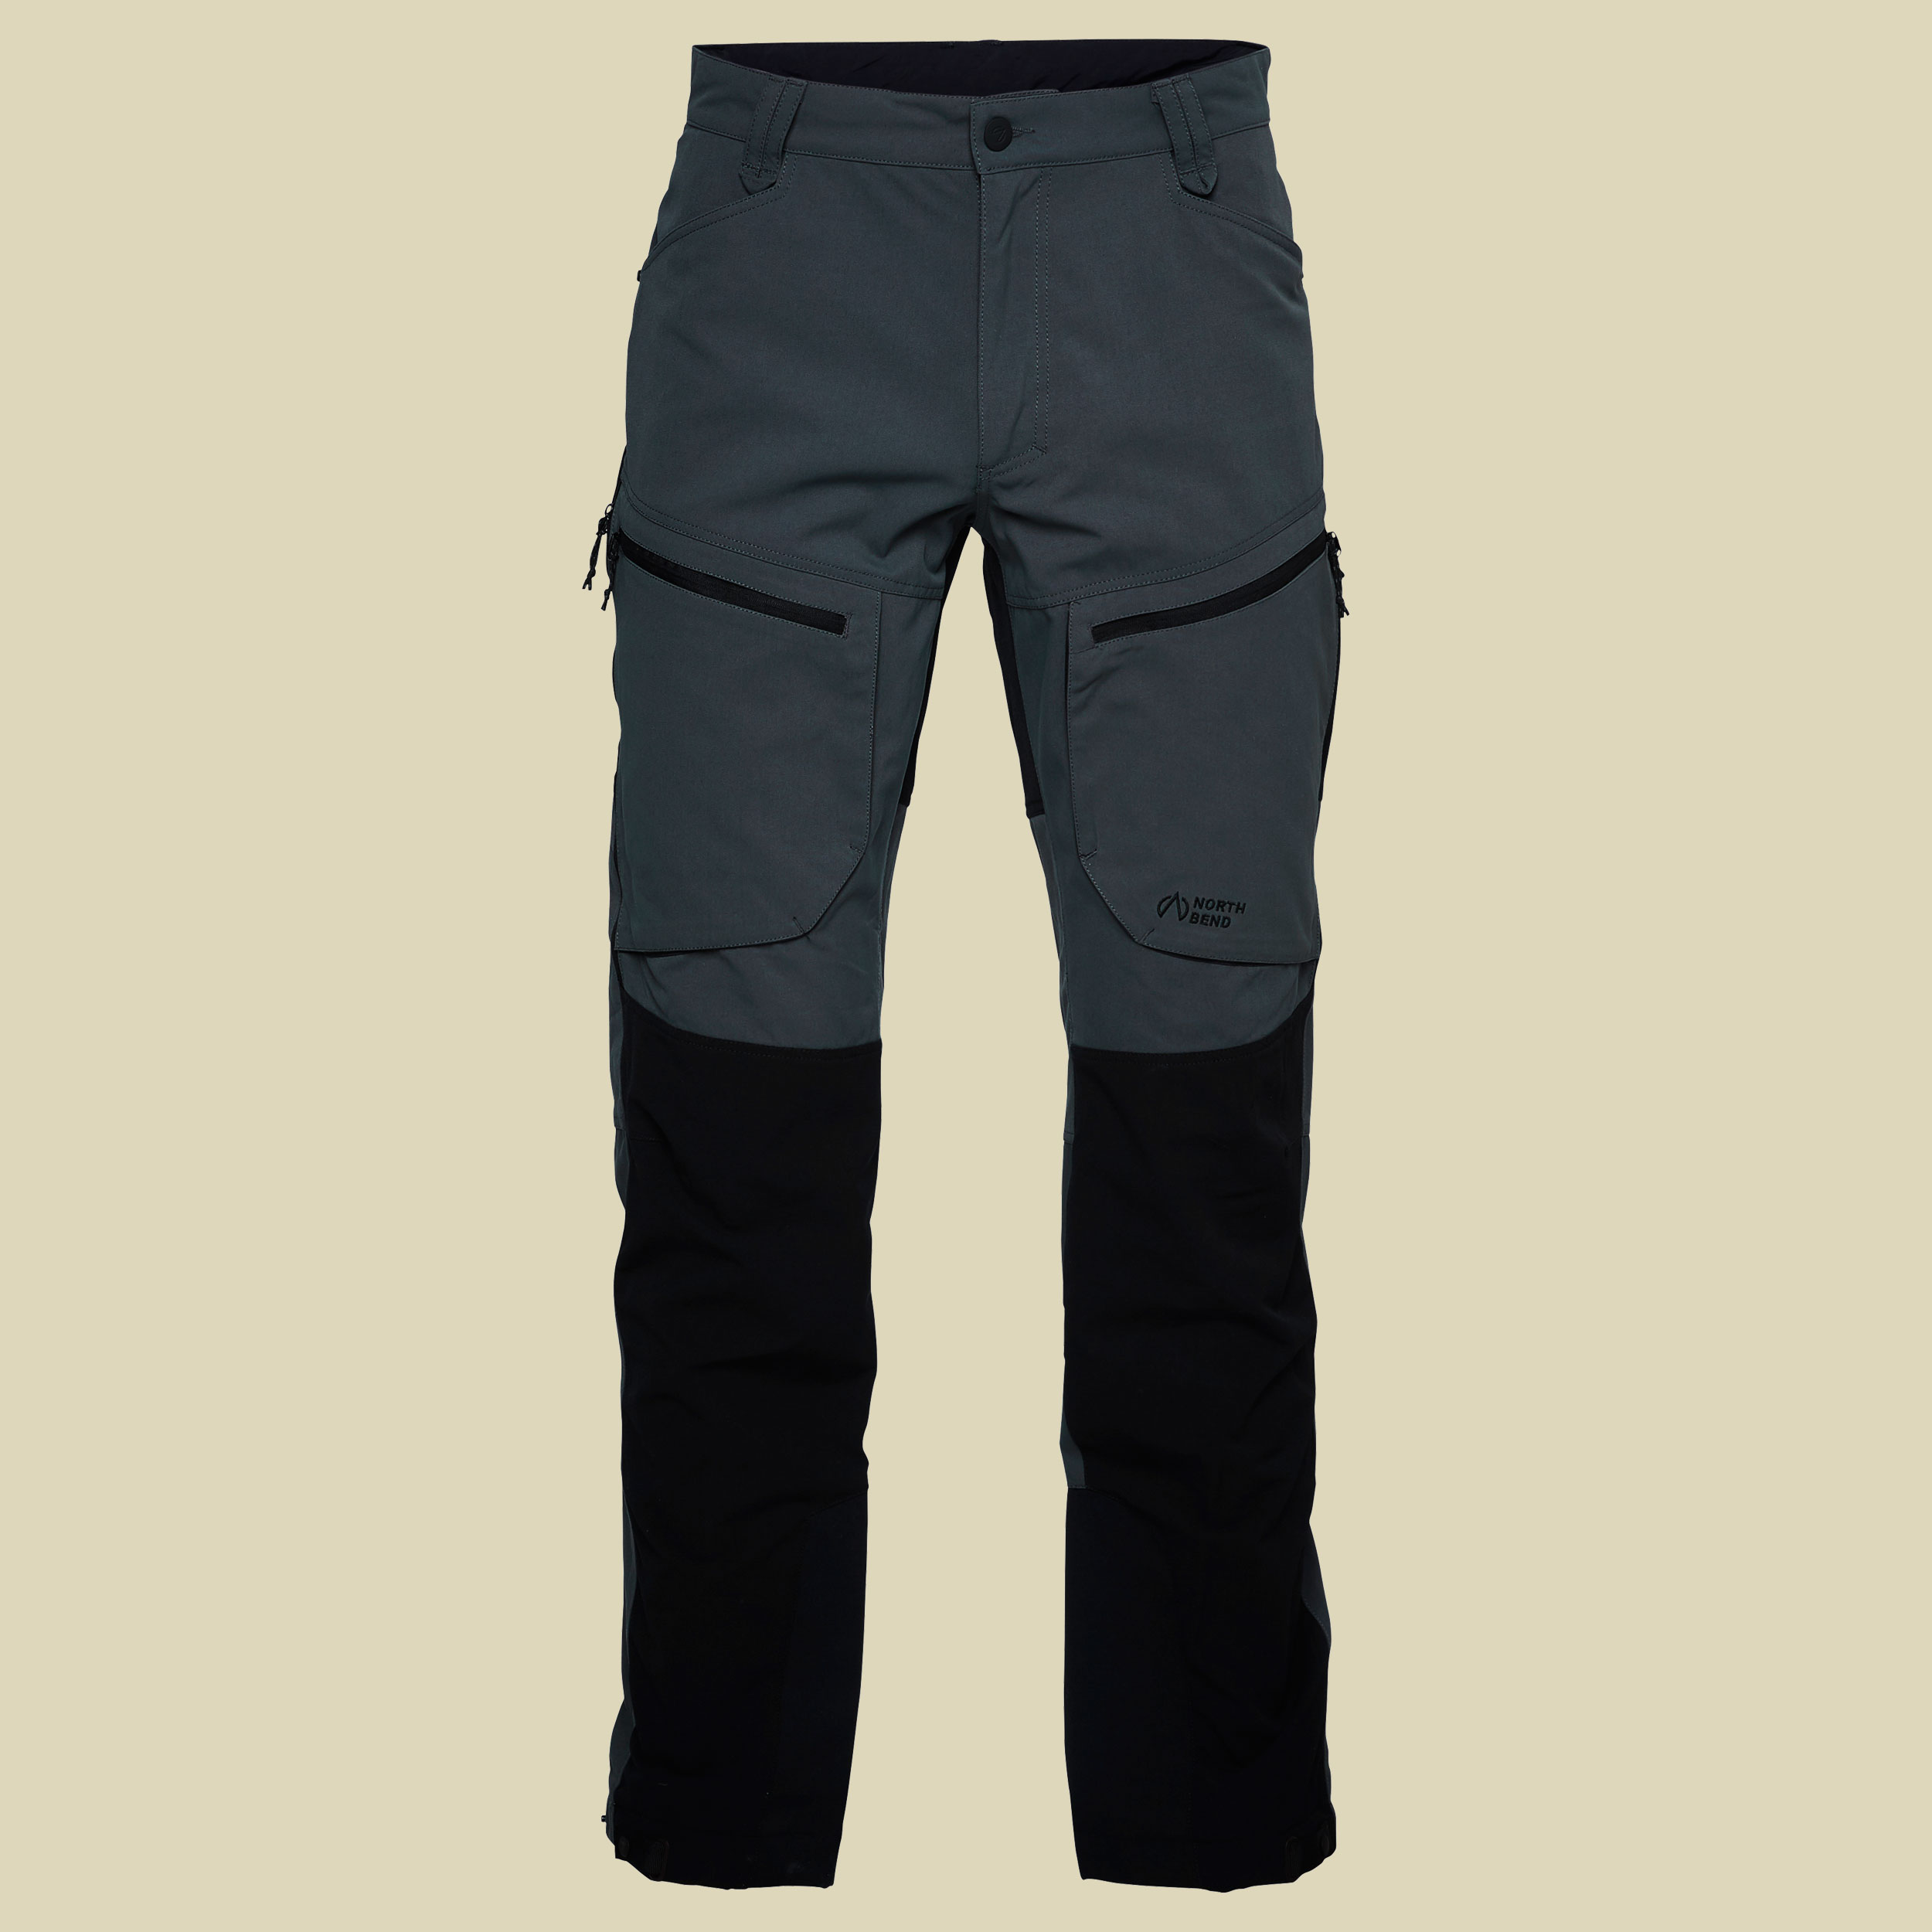 Trekk Pants Herren Trekkinghose Größe XL Farbe dunkelgrau 7005